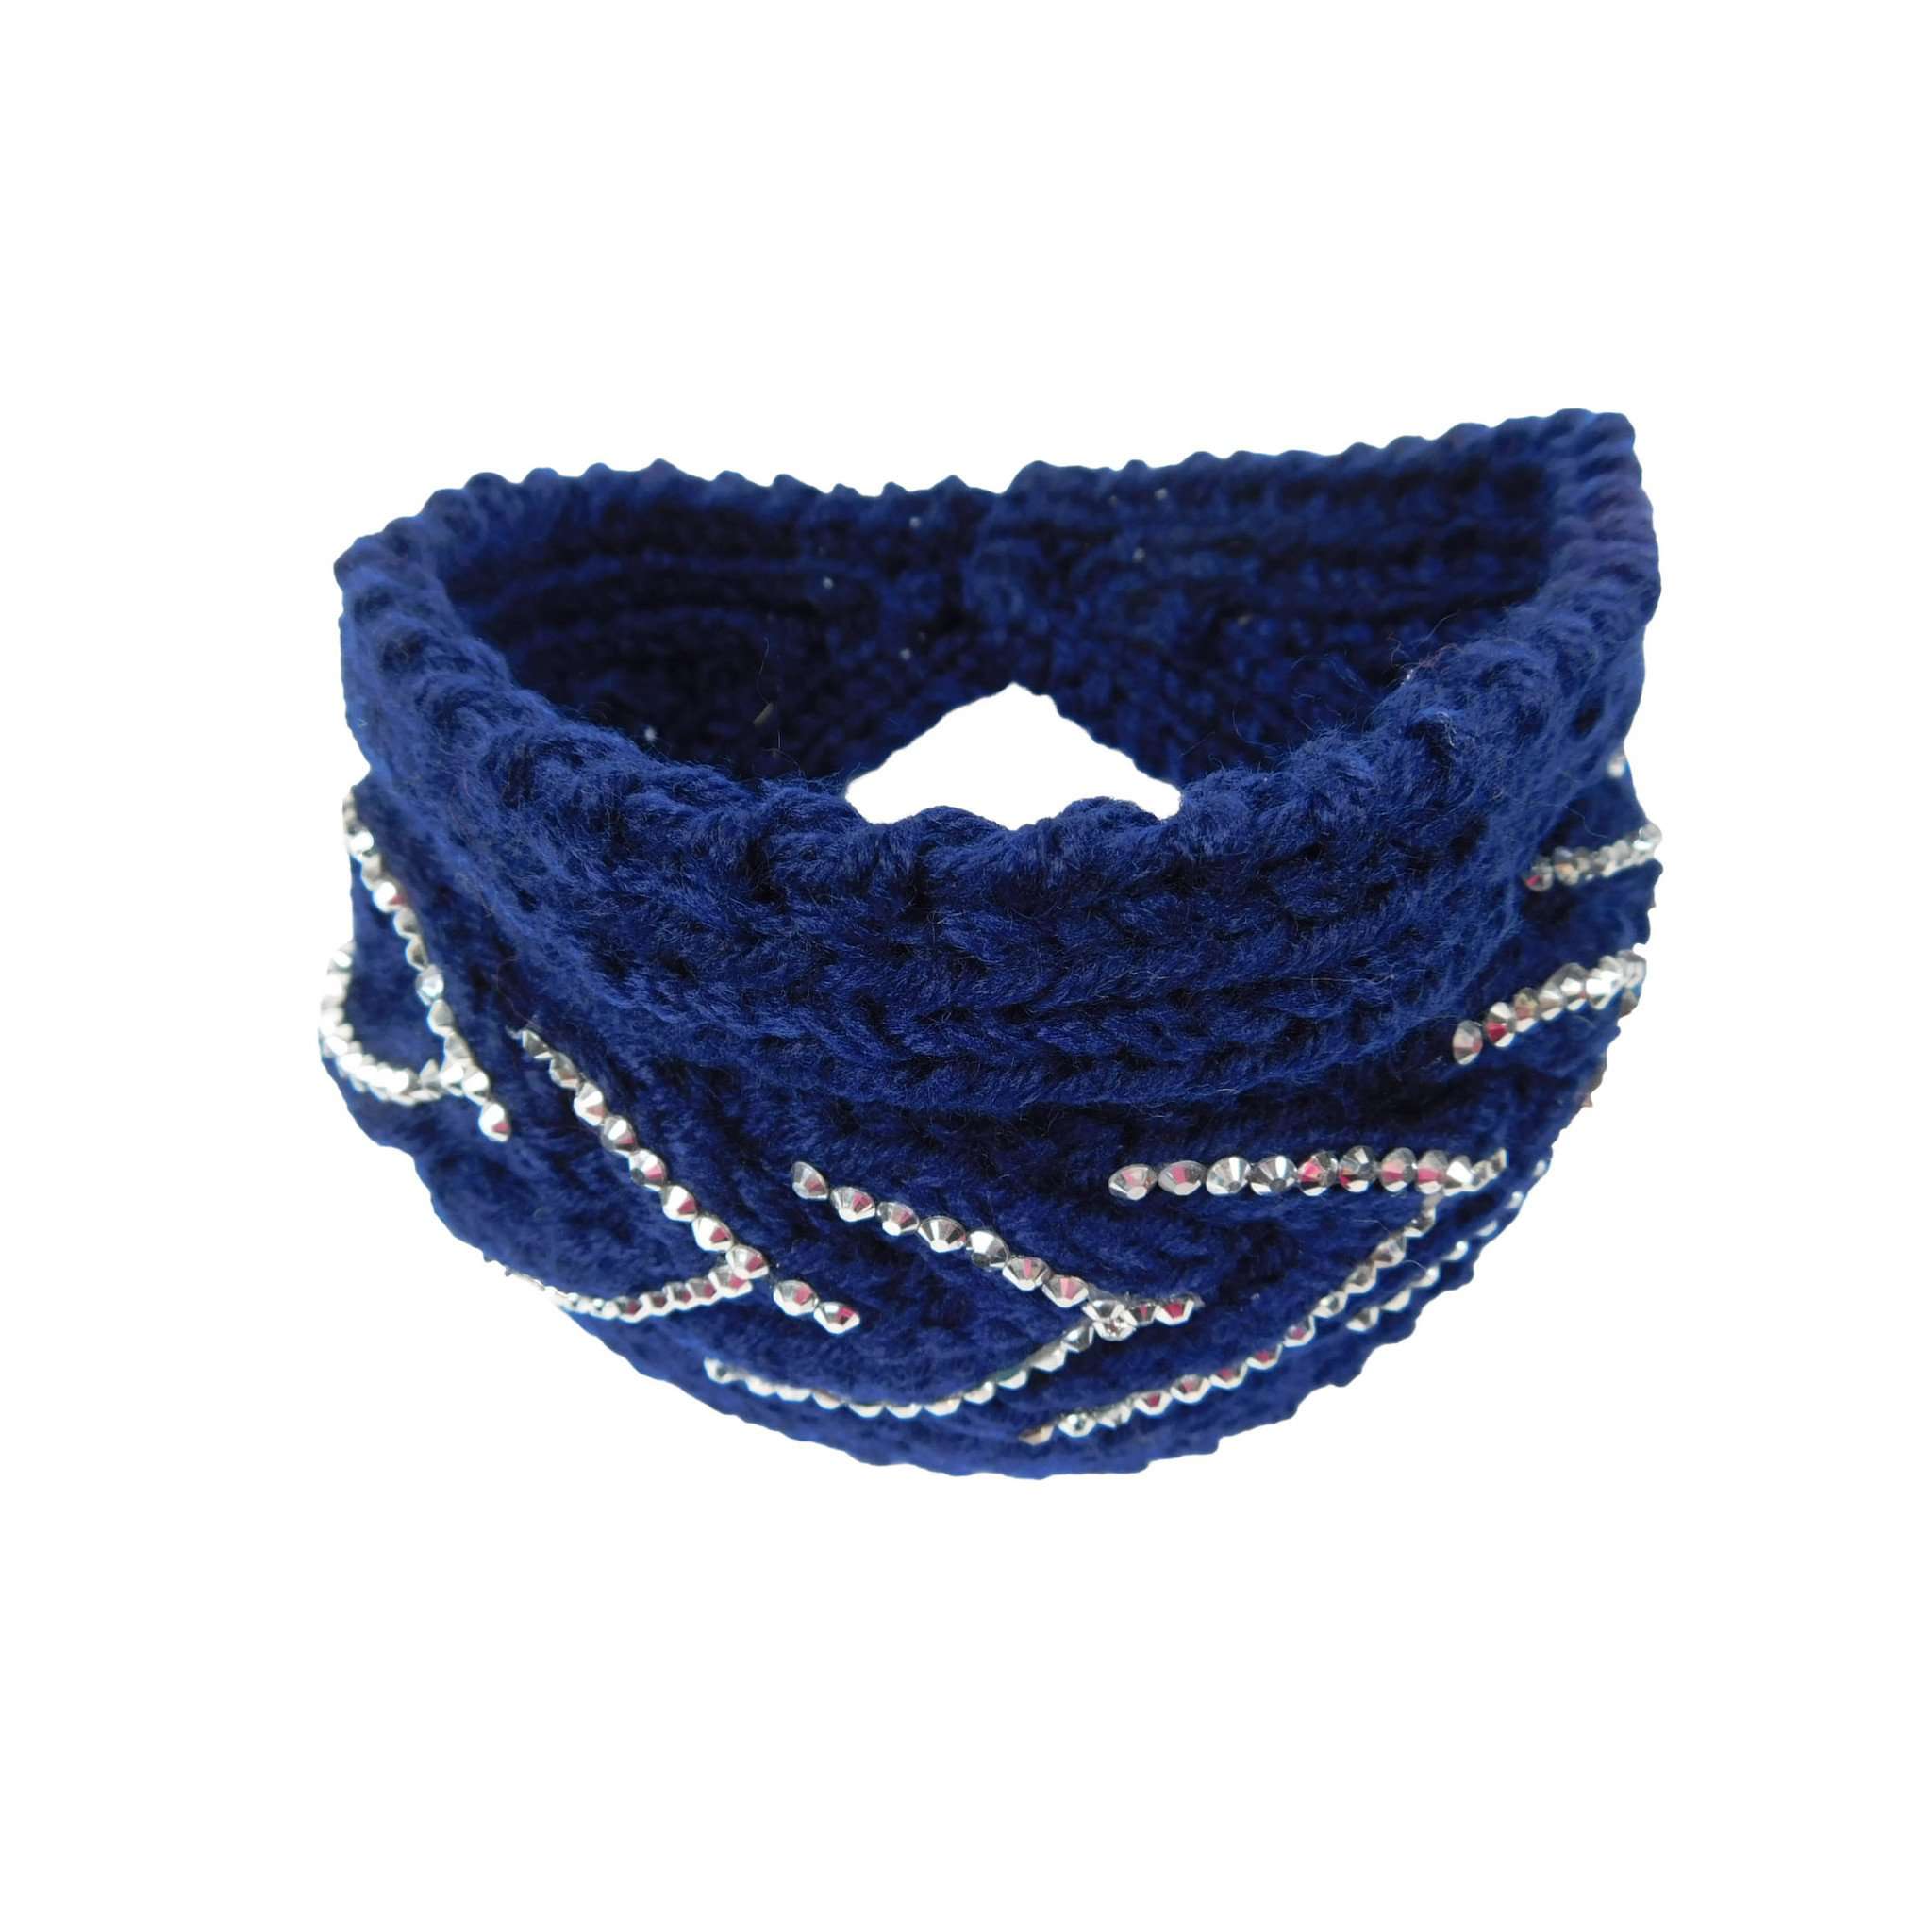 Knit Earwarmer Headband with Rhinestone Detail Headband Ori M0022BL Blue  